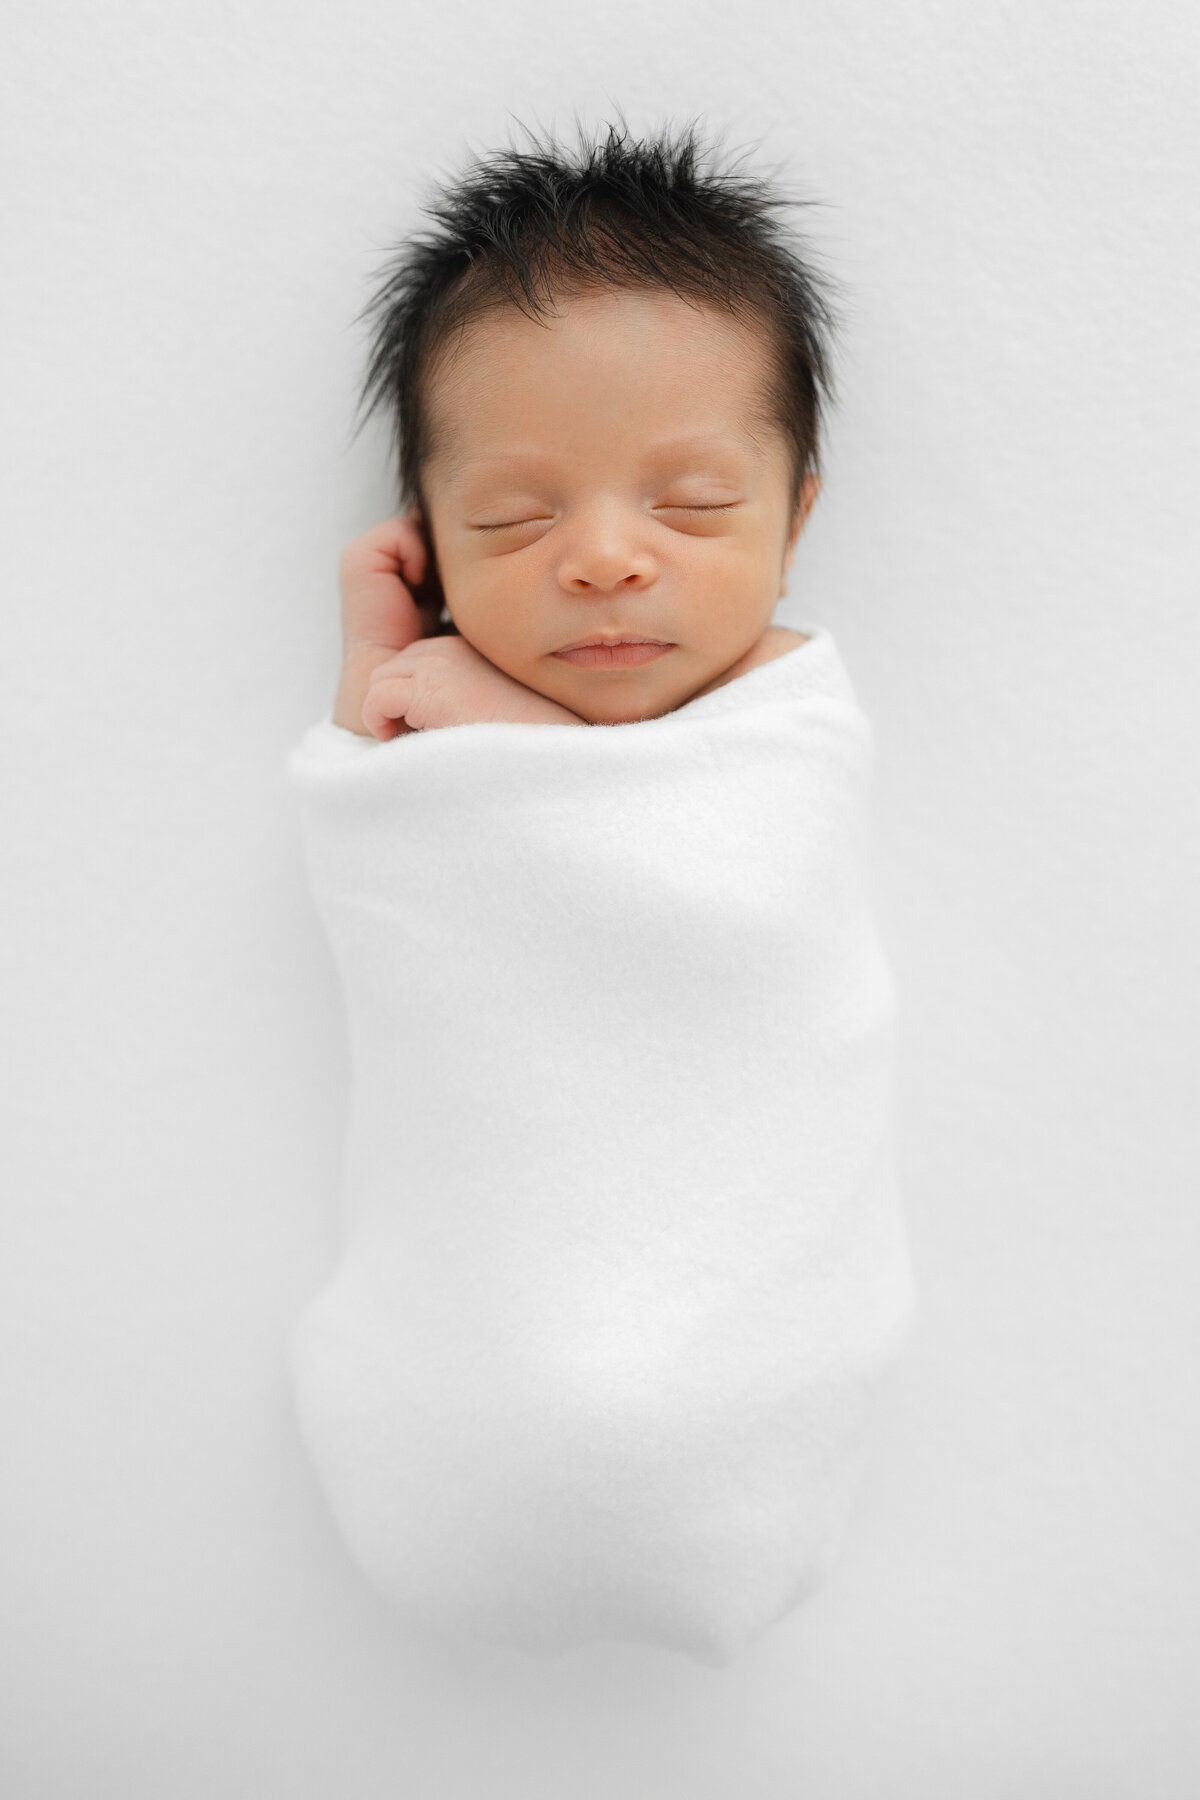 A Nova Studio Photography  newborn photo of a newborn baby sleeping in white swaddle on a white blanket